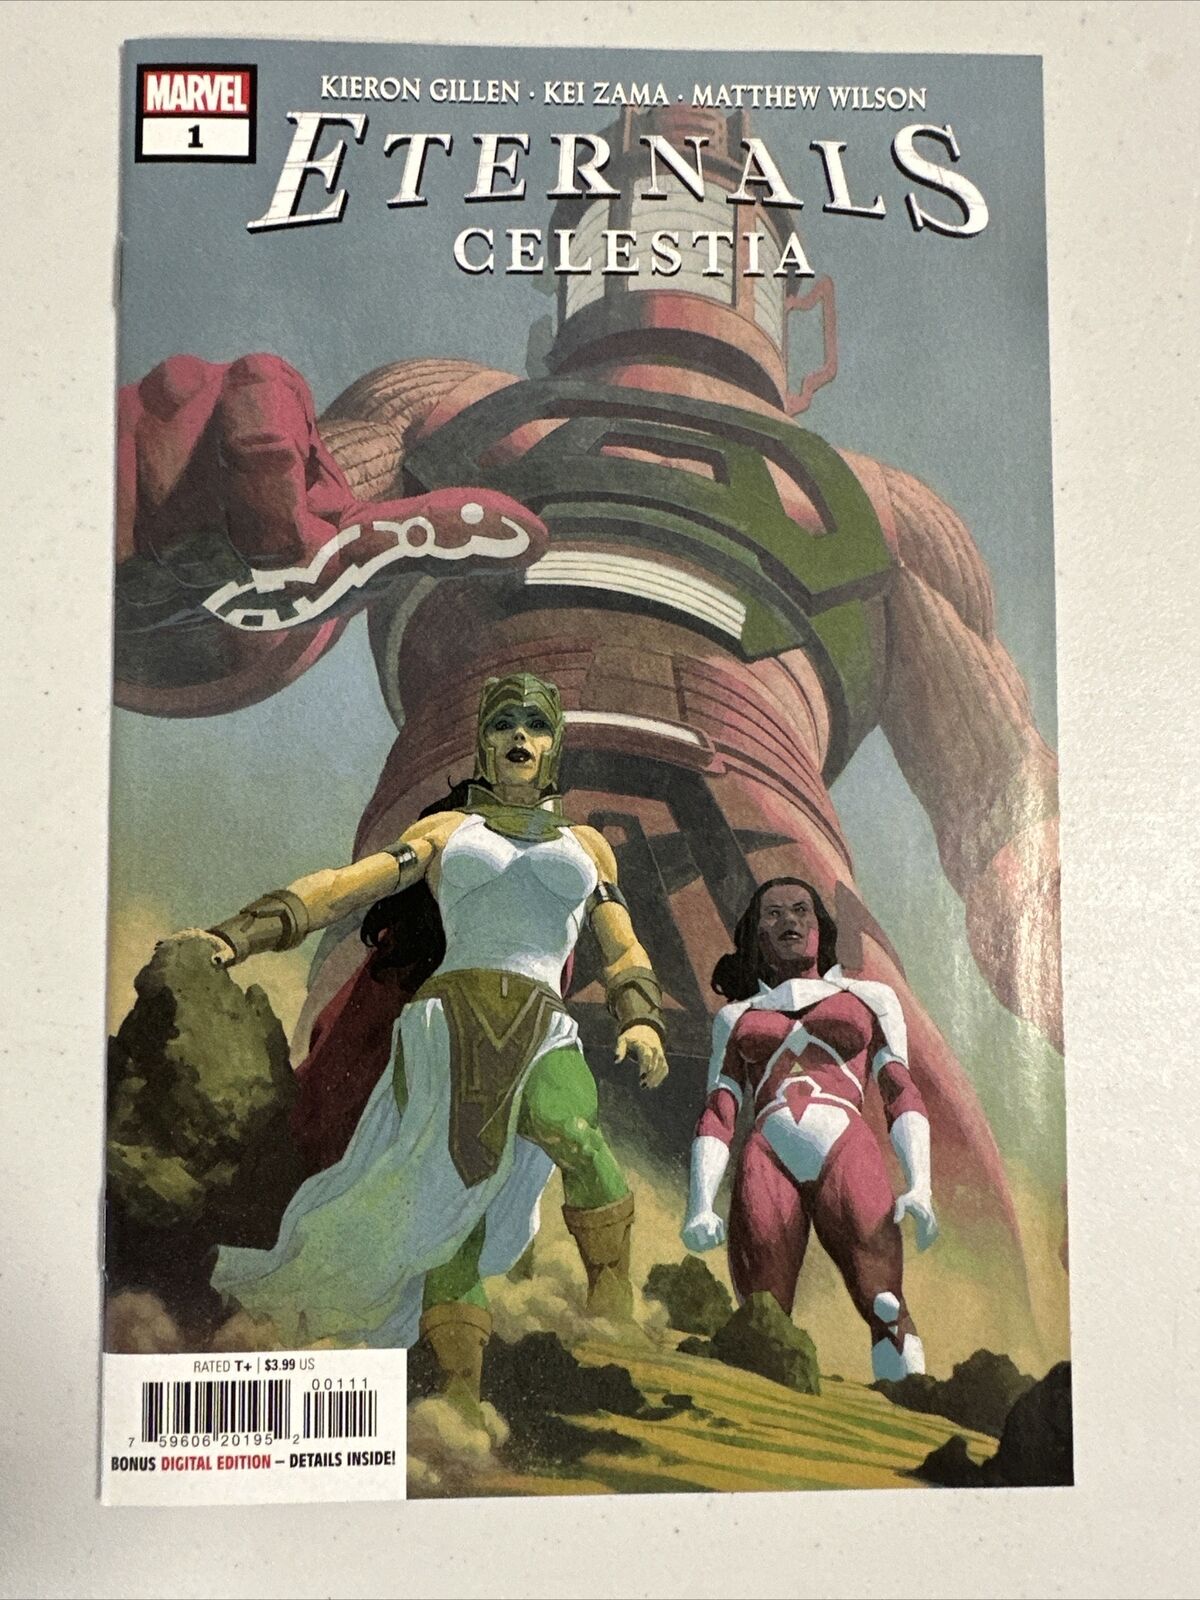 The Eternals Celestia #1 Marvel Comics HIGH GRADE COMBINE S&H